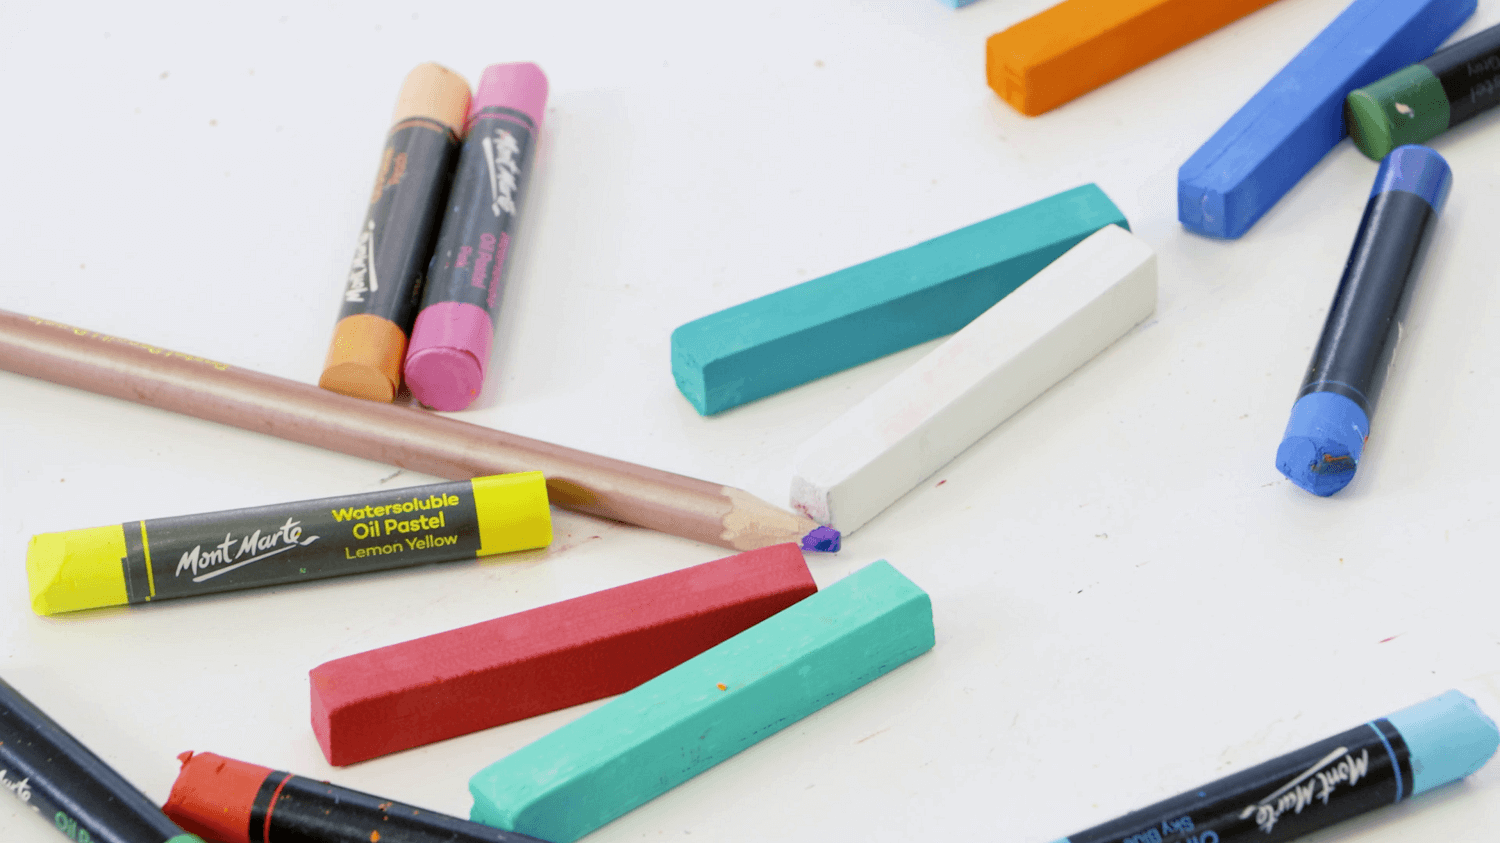 Guide to choosing pastels